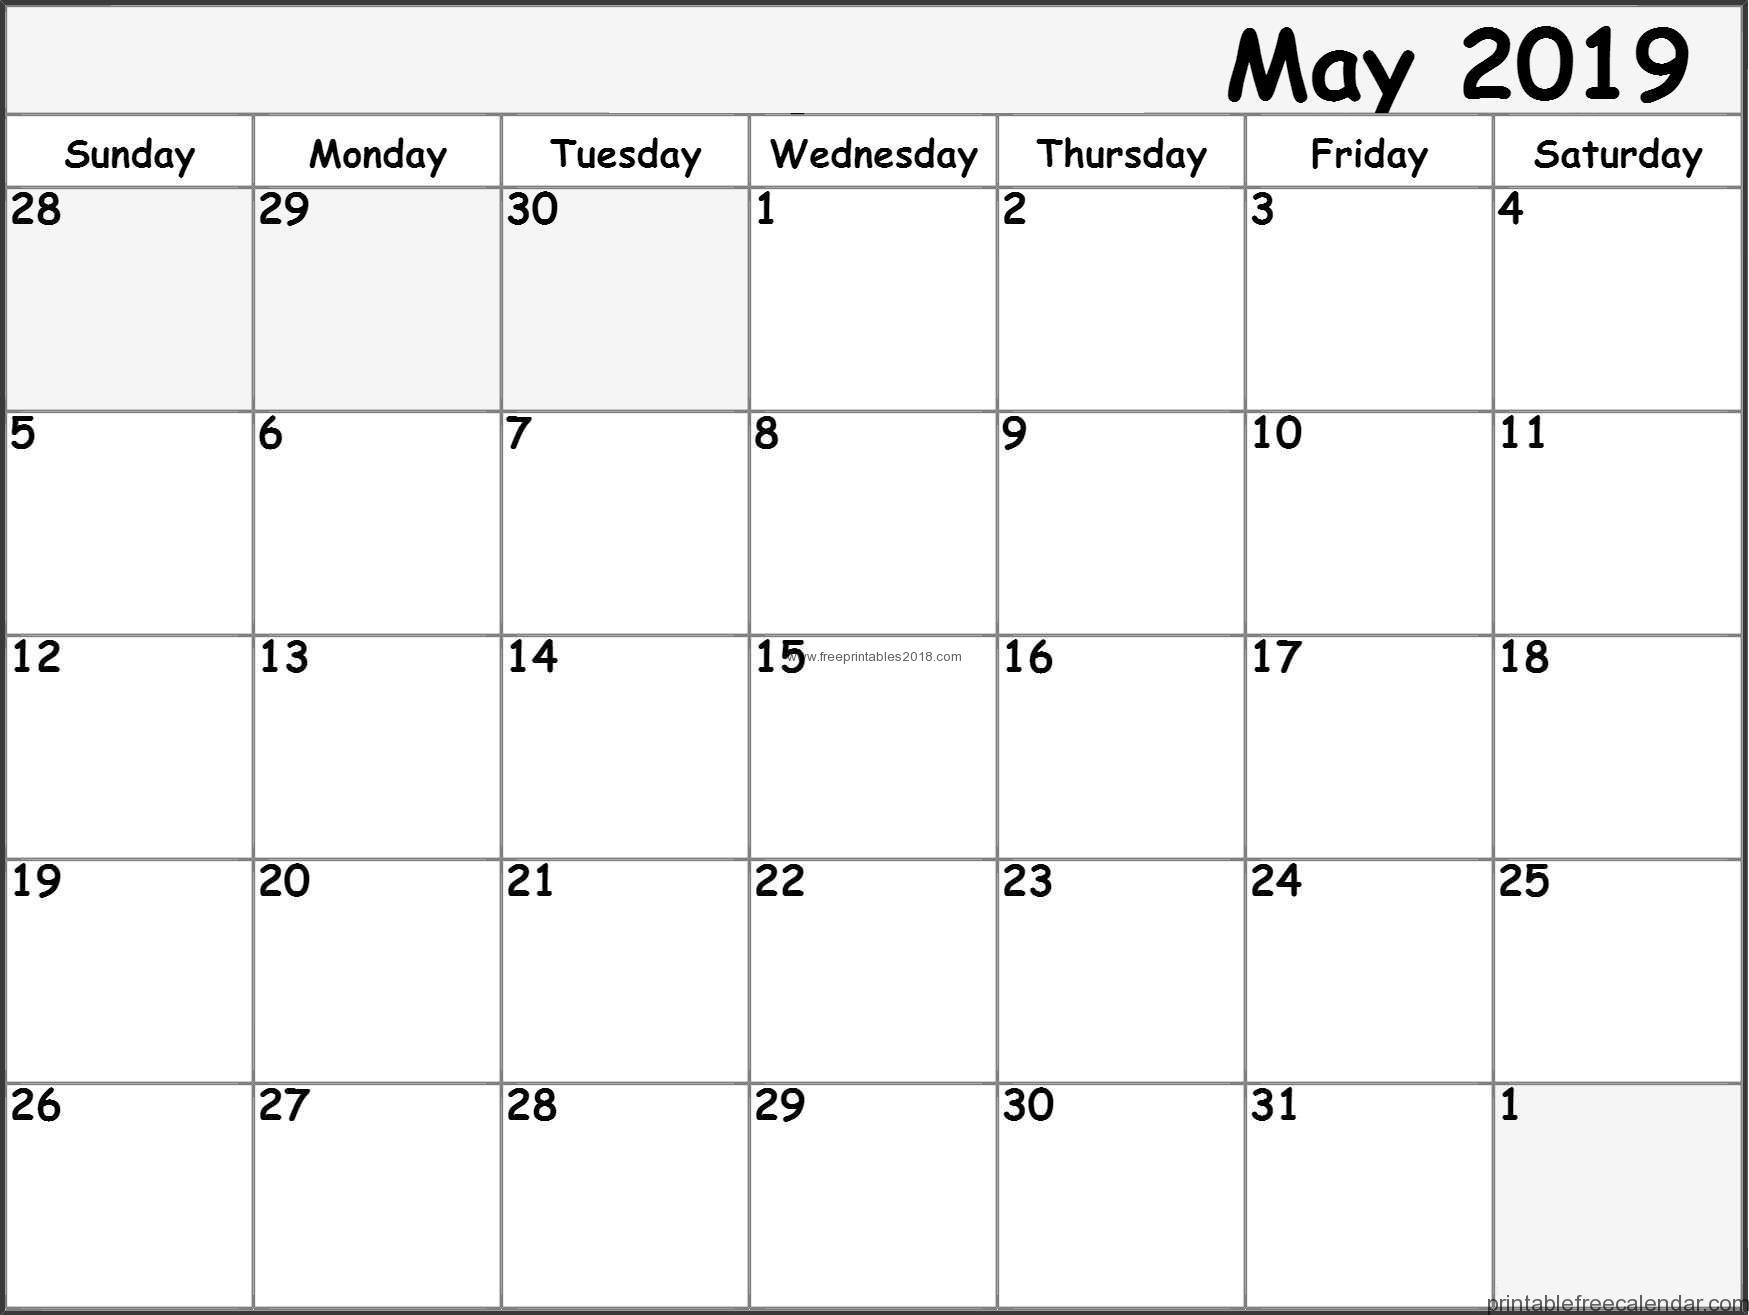 may-2019-printable-calendar-icalendars